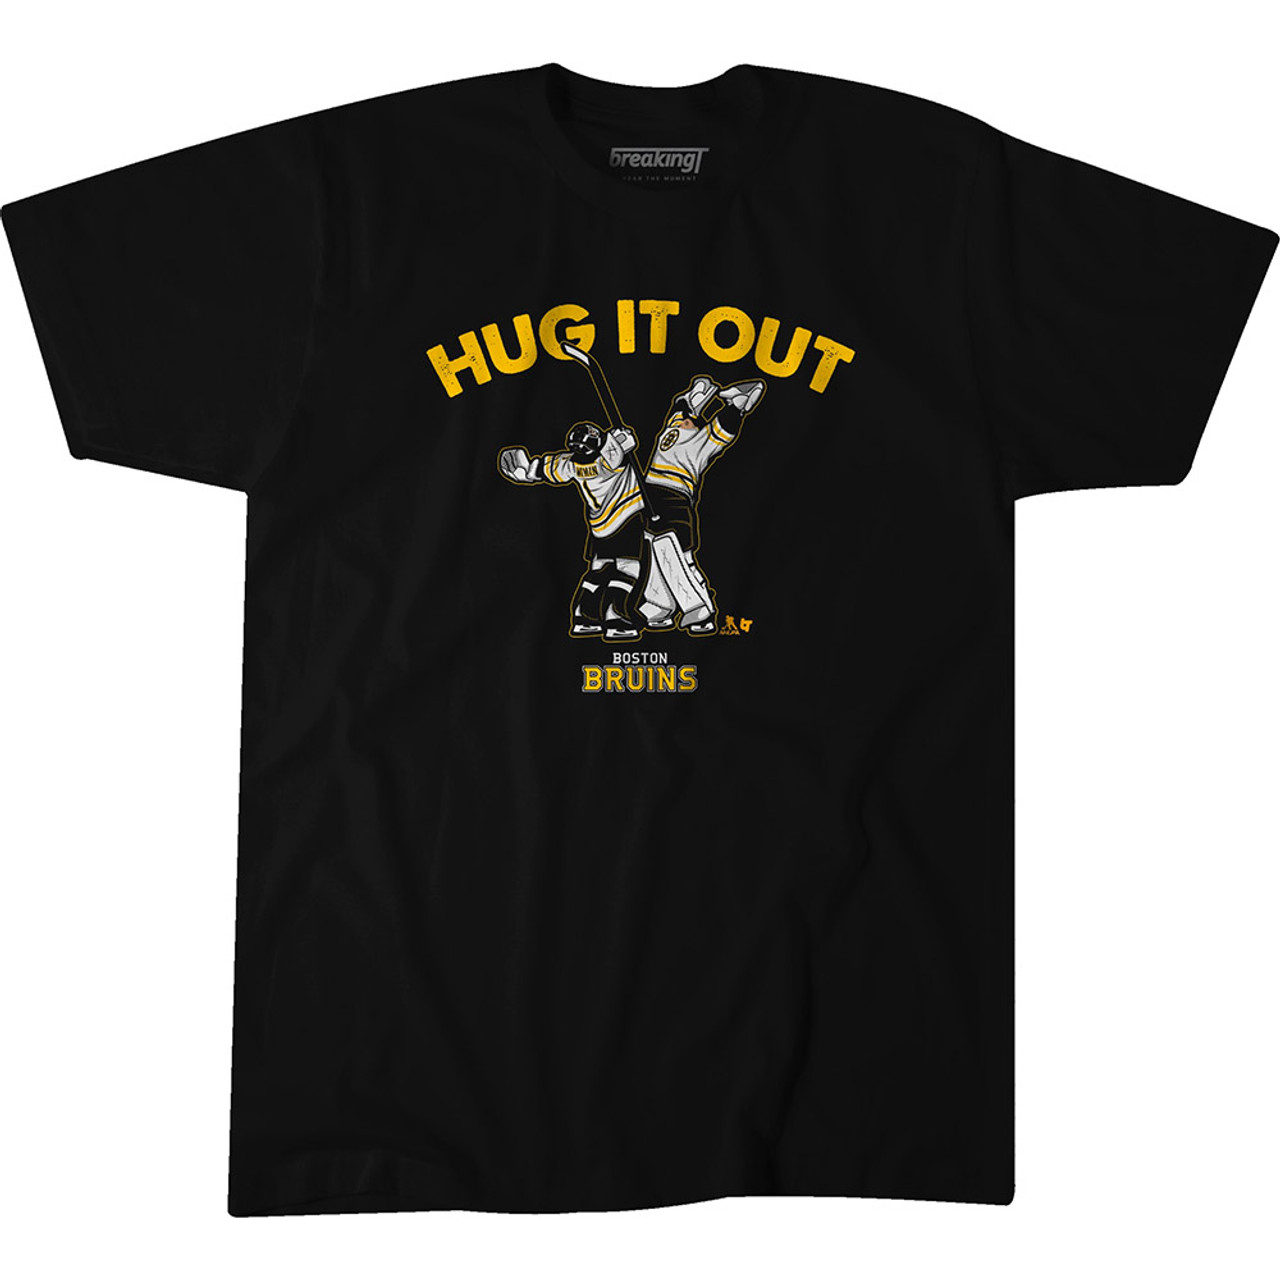 Boston Bruins on X: That's a shutout level hug.